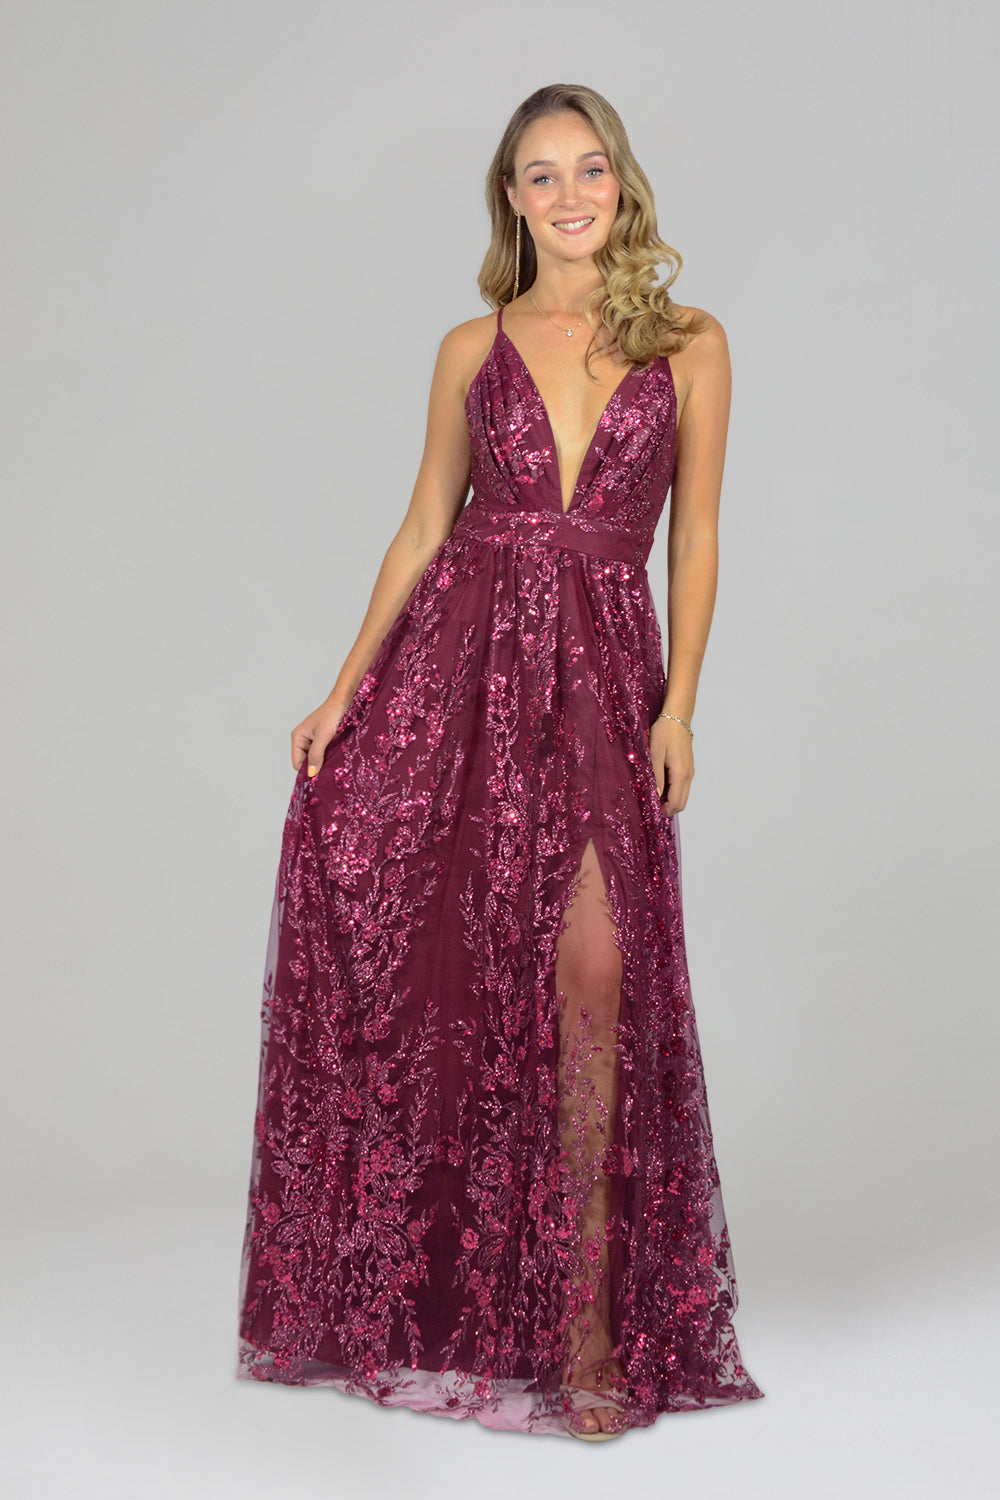 Windsor Plus Juliet Formal Sequin Scroll Dress | CoolSprings Galleria